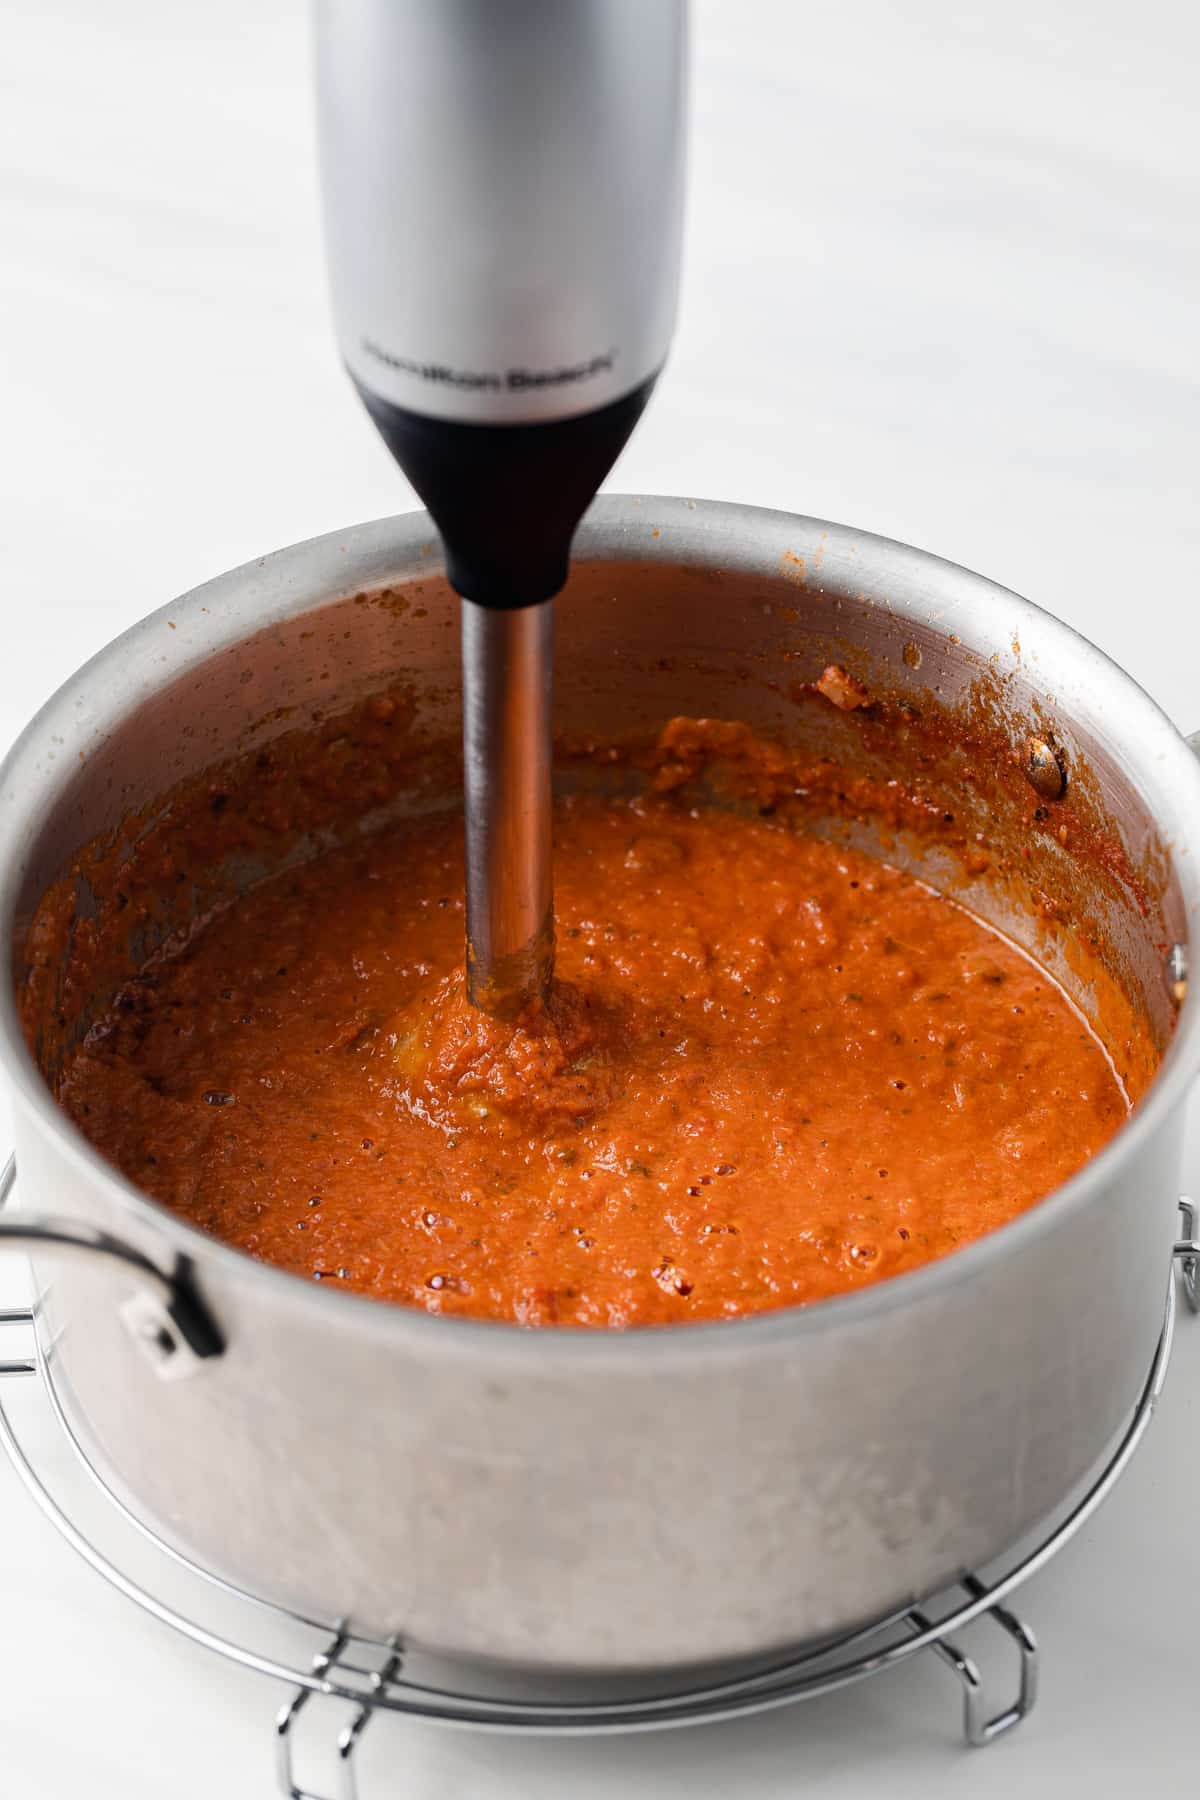 Immersion blender pureeing ranchero sauce.